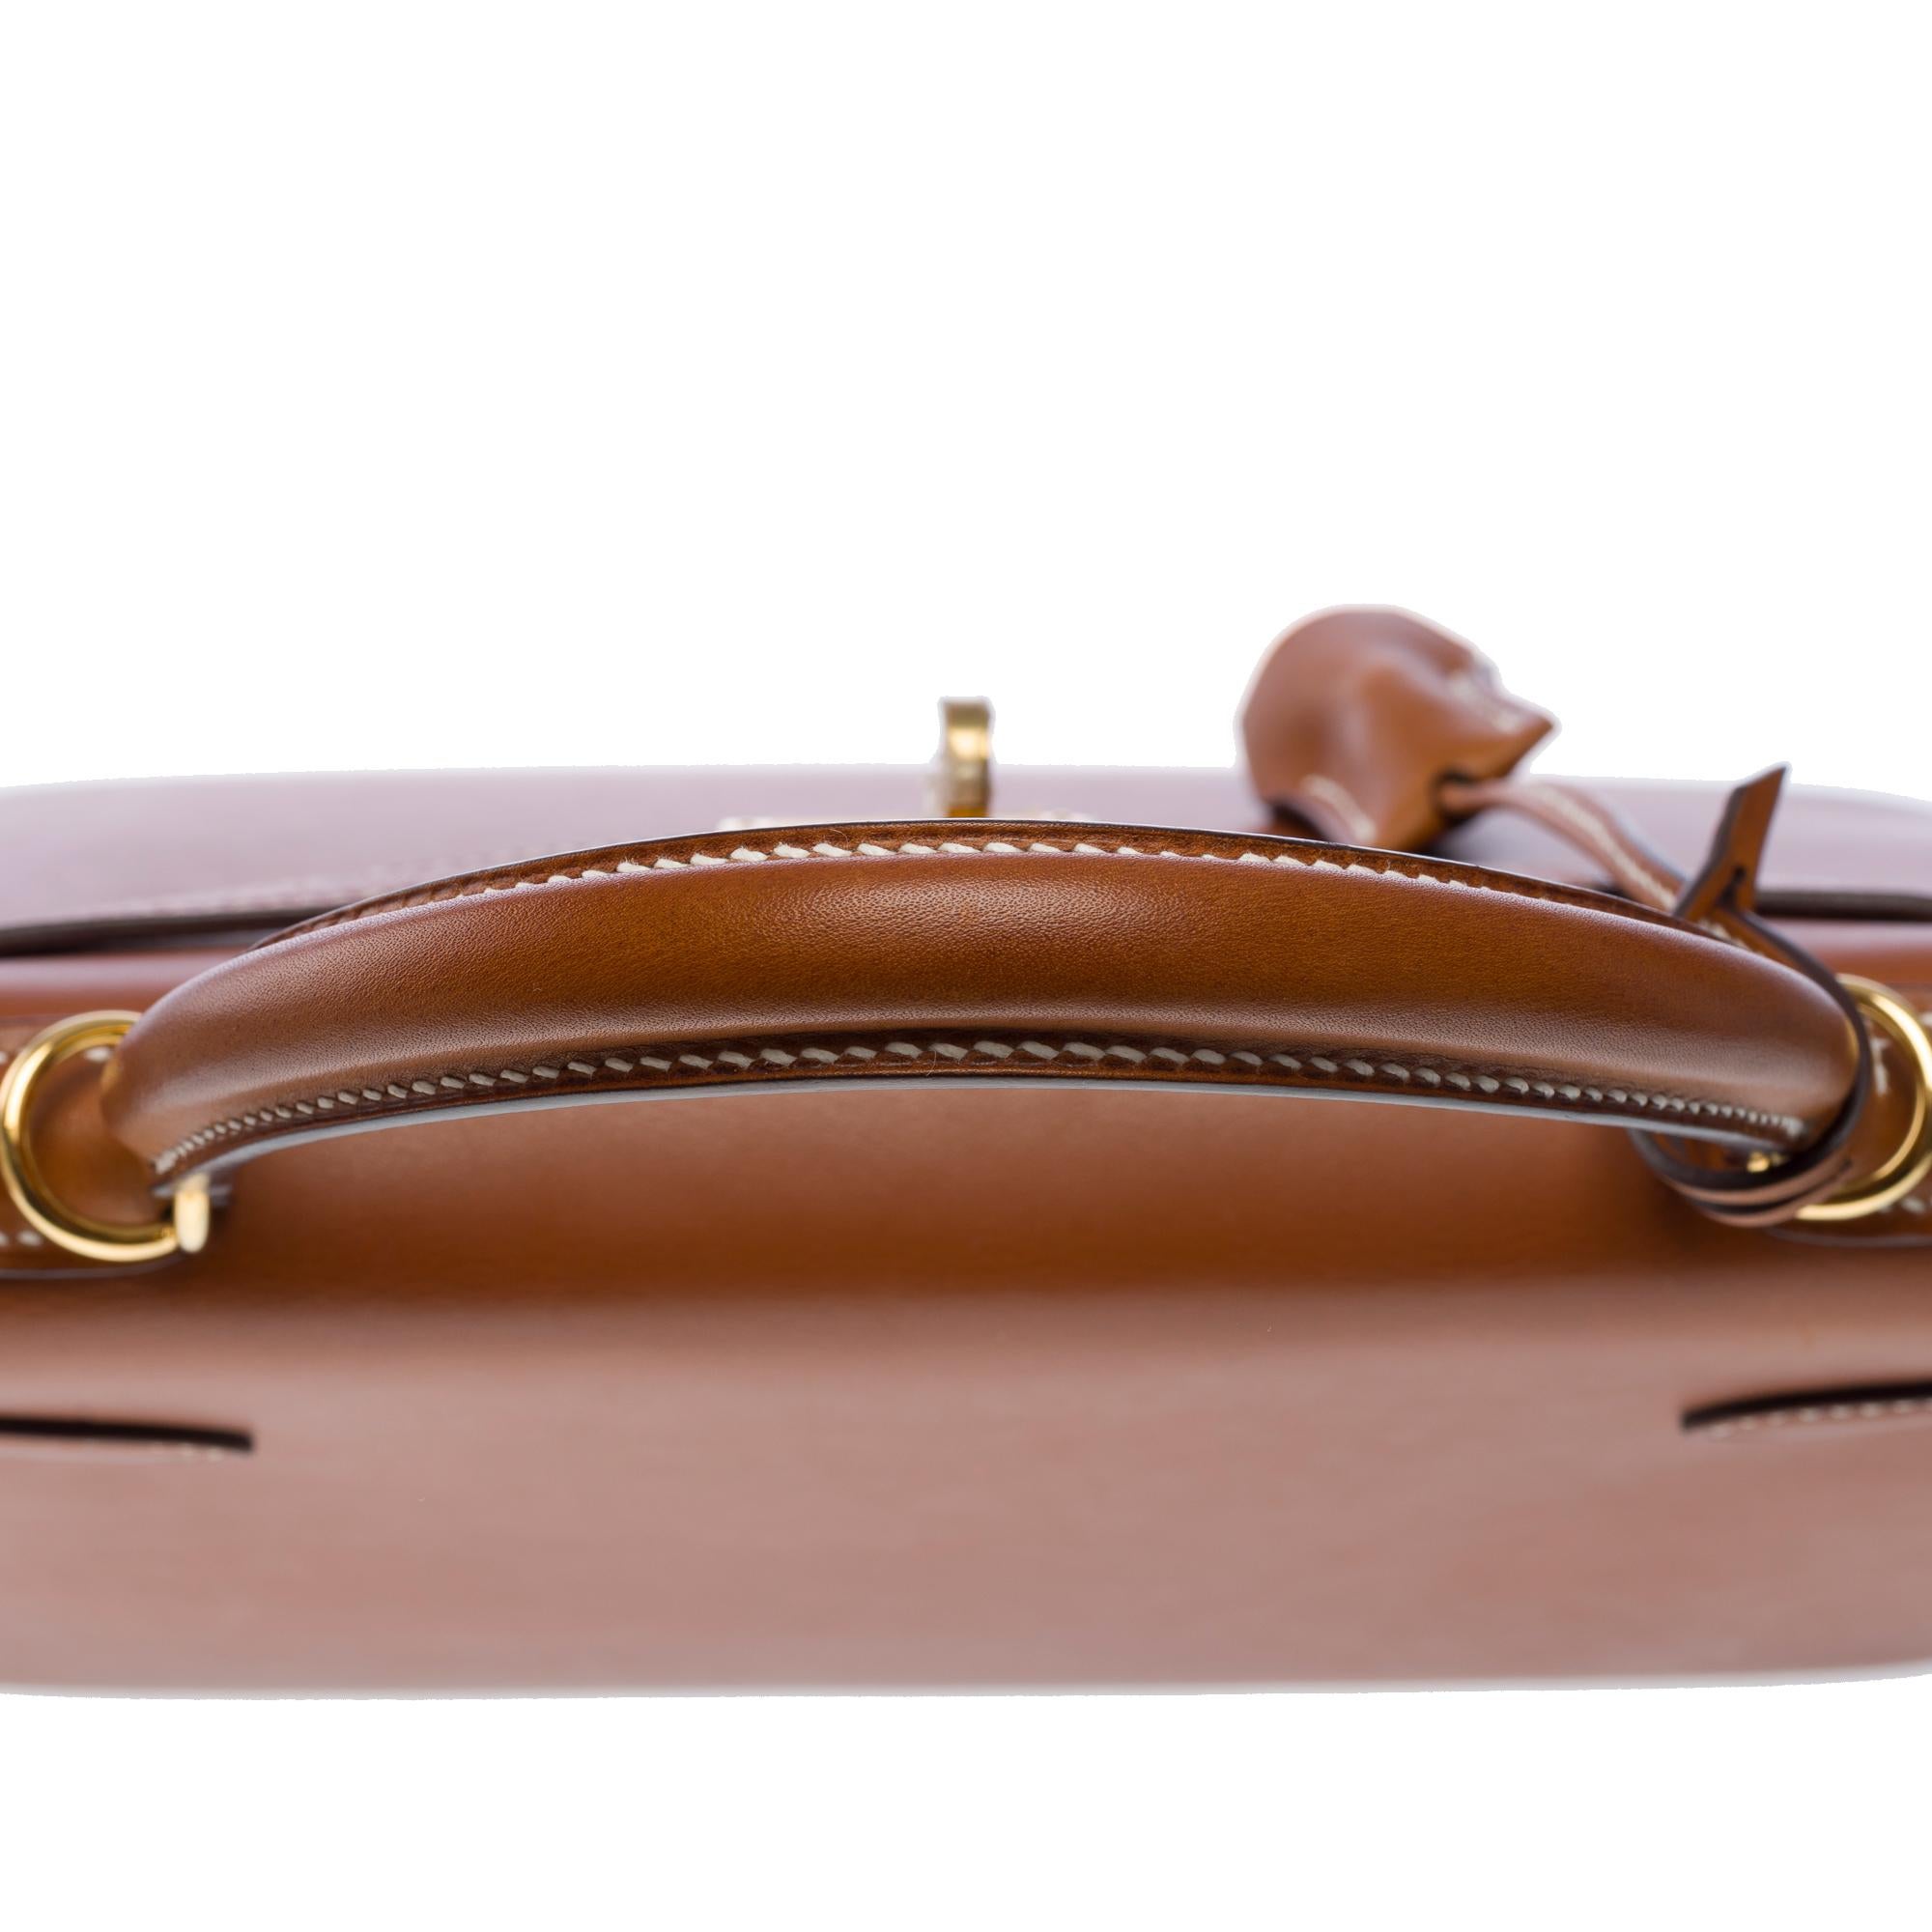 Very Rare Hermès Kelly 25 sellier handbag strap in Gold Barenia leather, GHW 6